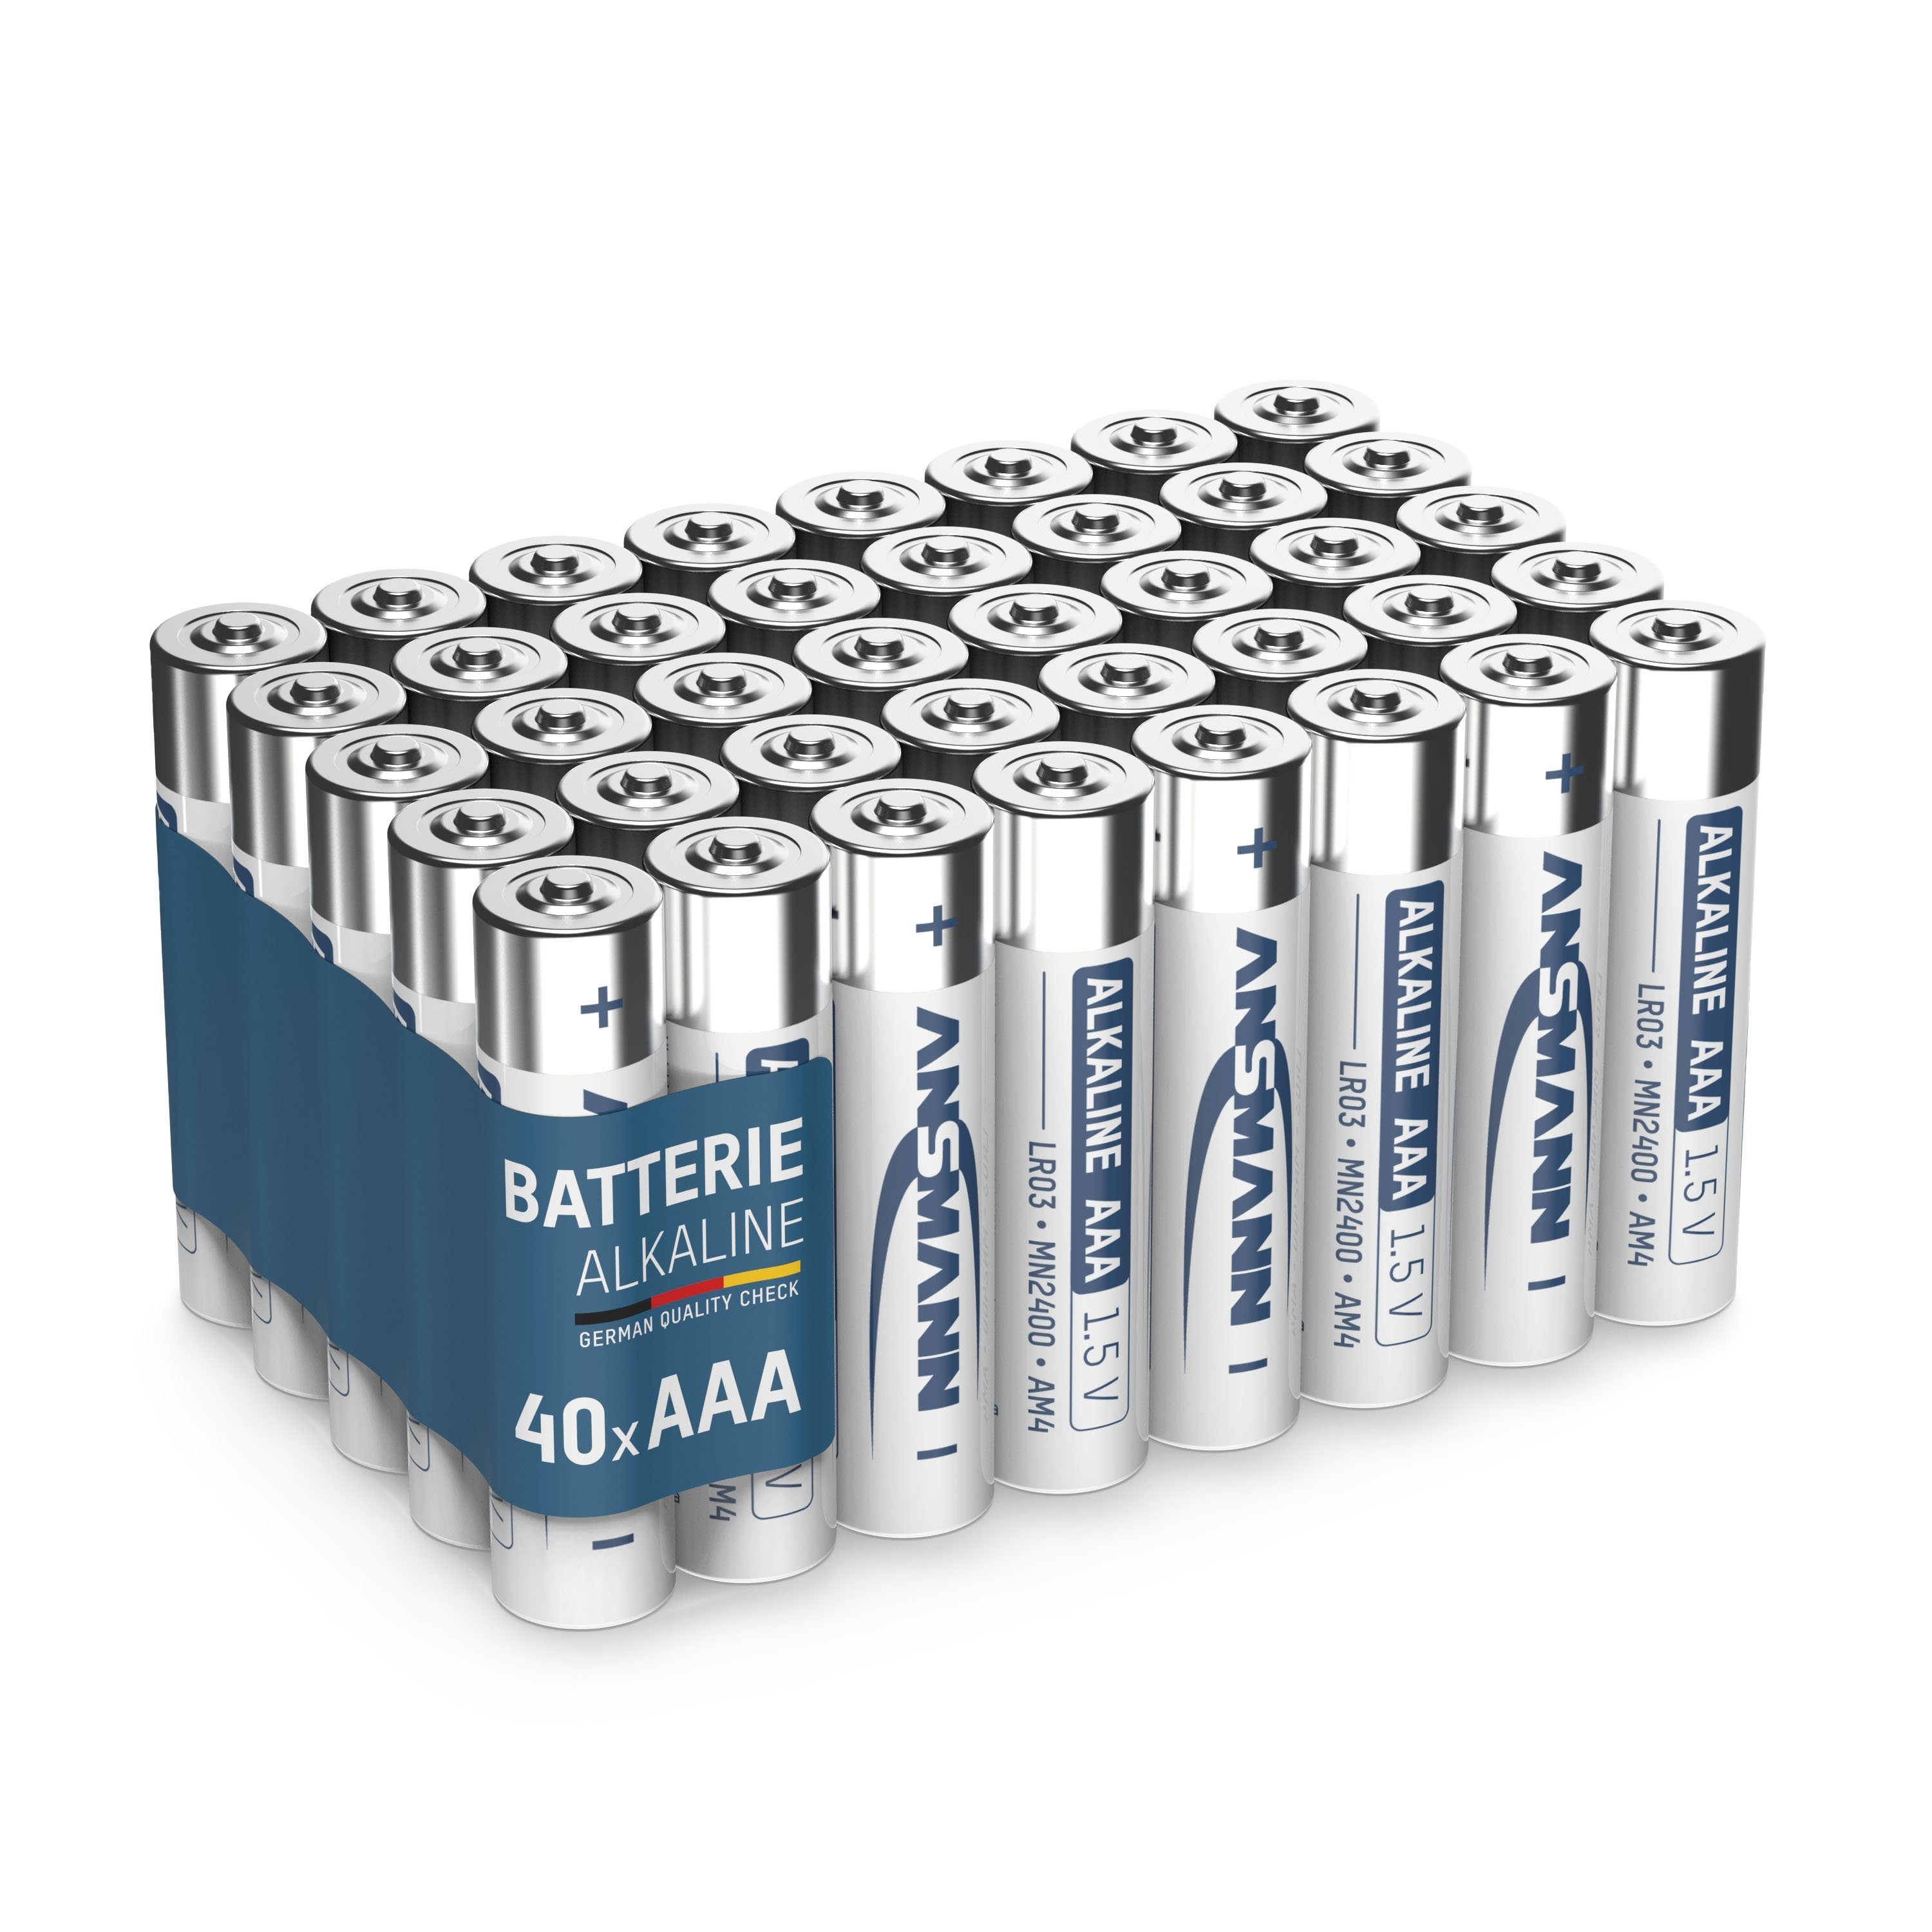 ANSMANN® Batterien AAA 40 Stück, Micro Batterie für Lichterkette, Spielzeug  Batterie